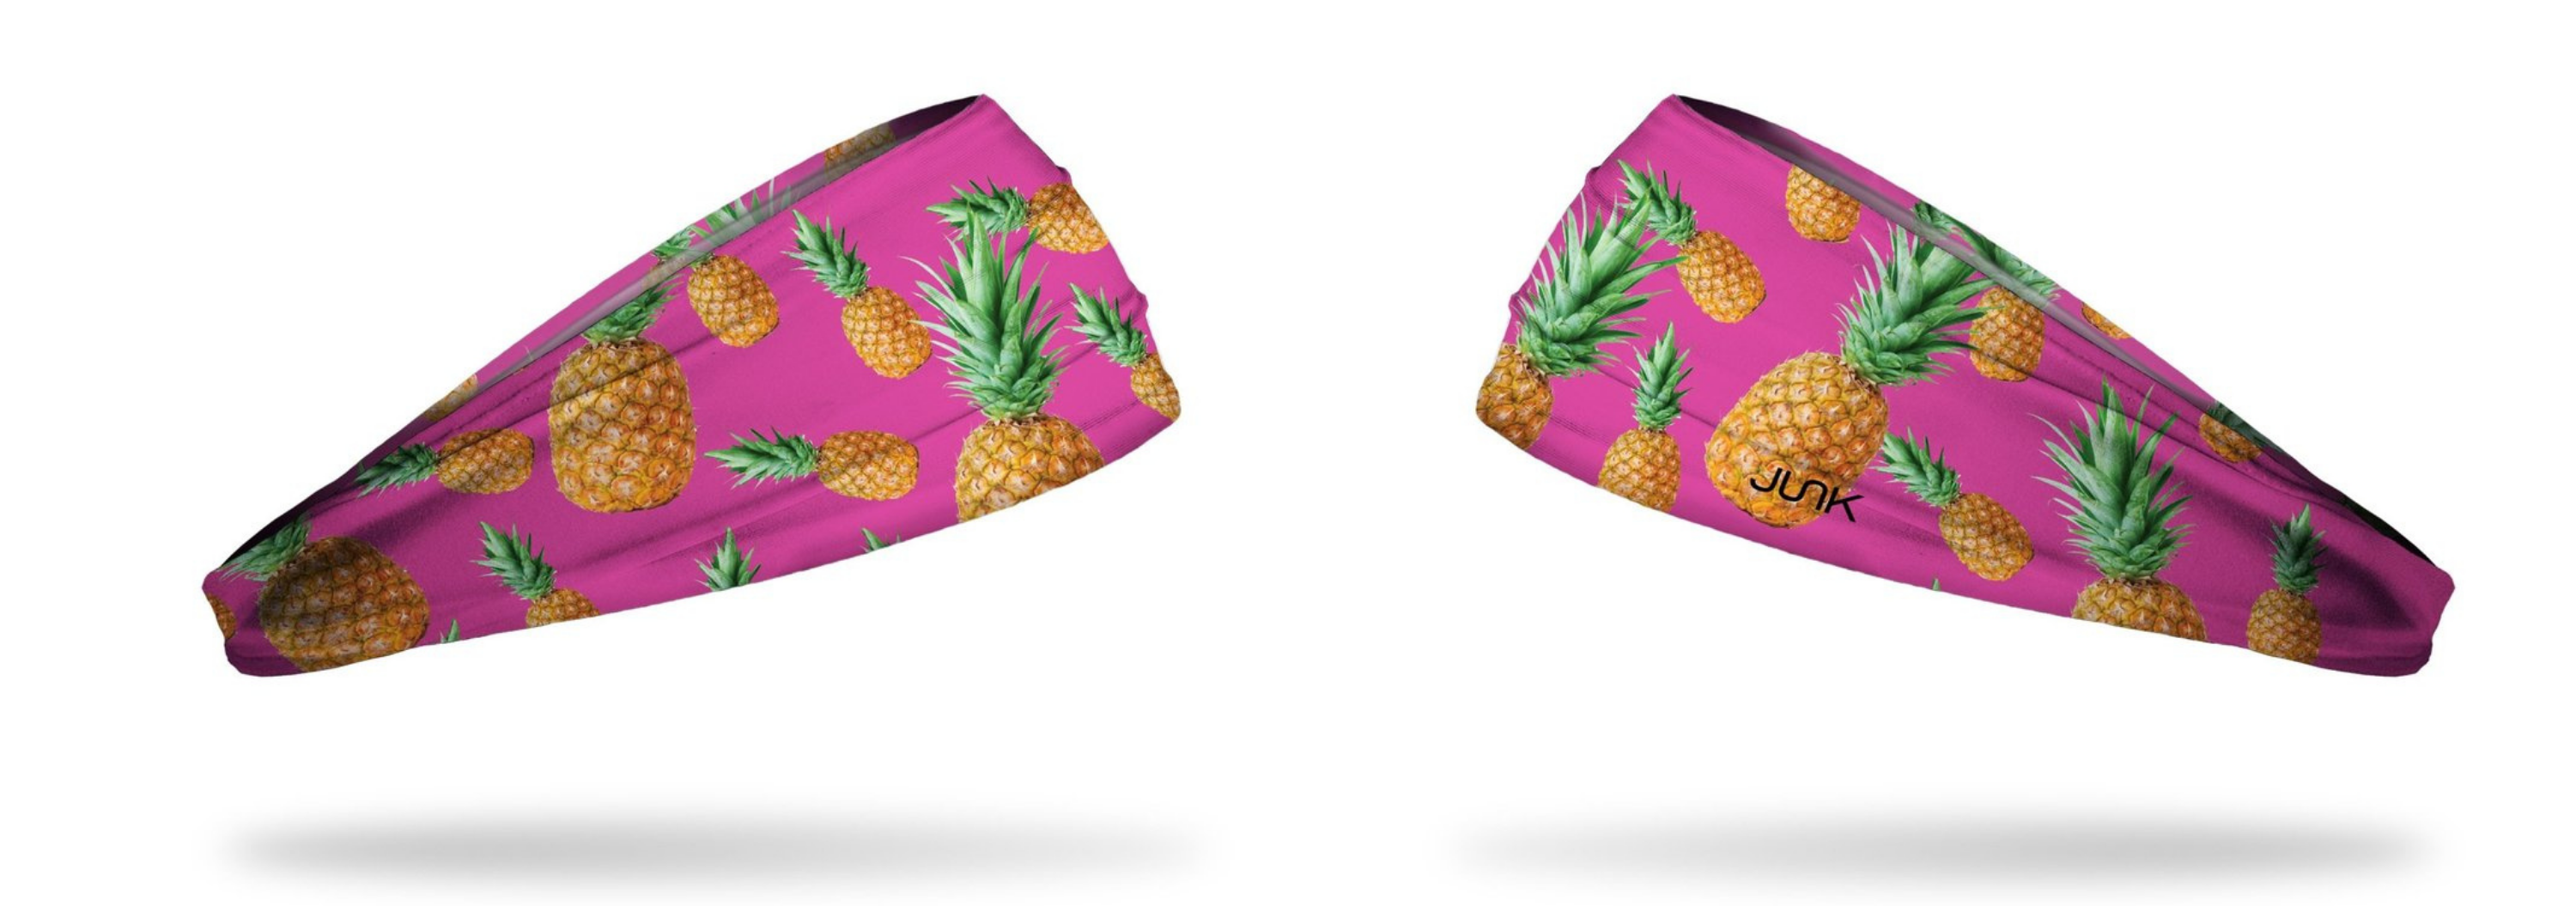 Pineapple prints on a pink headband